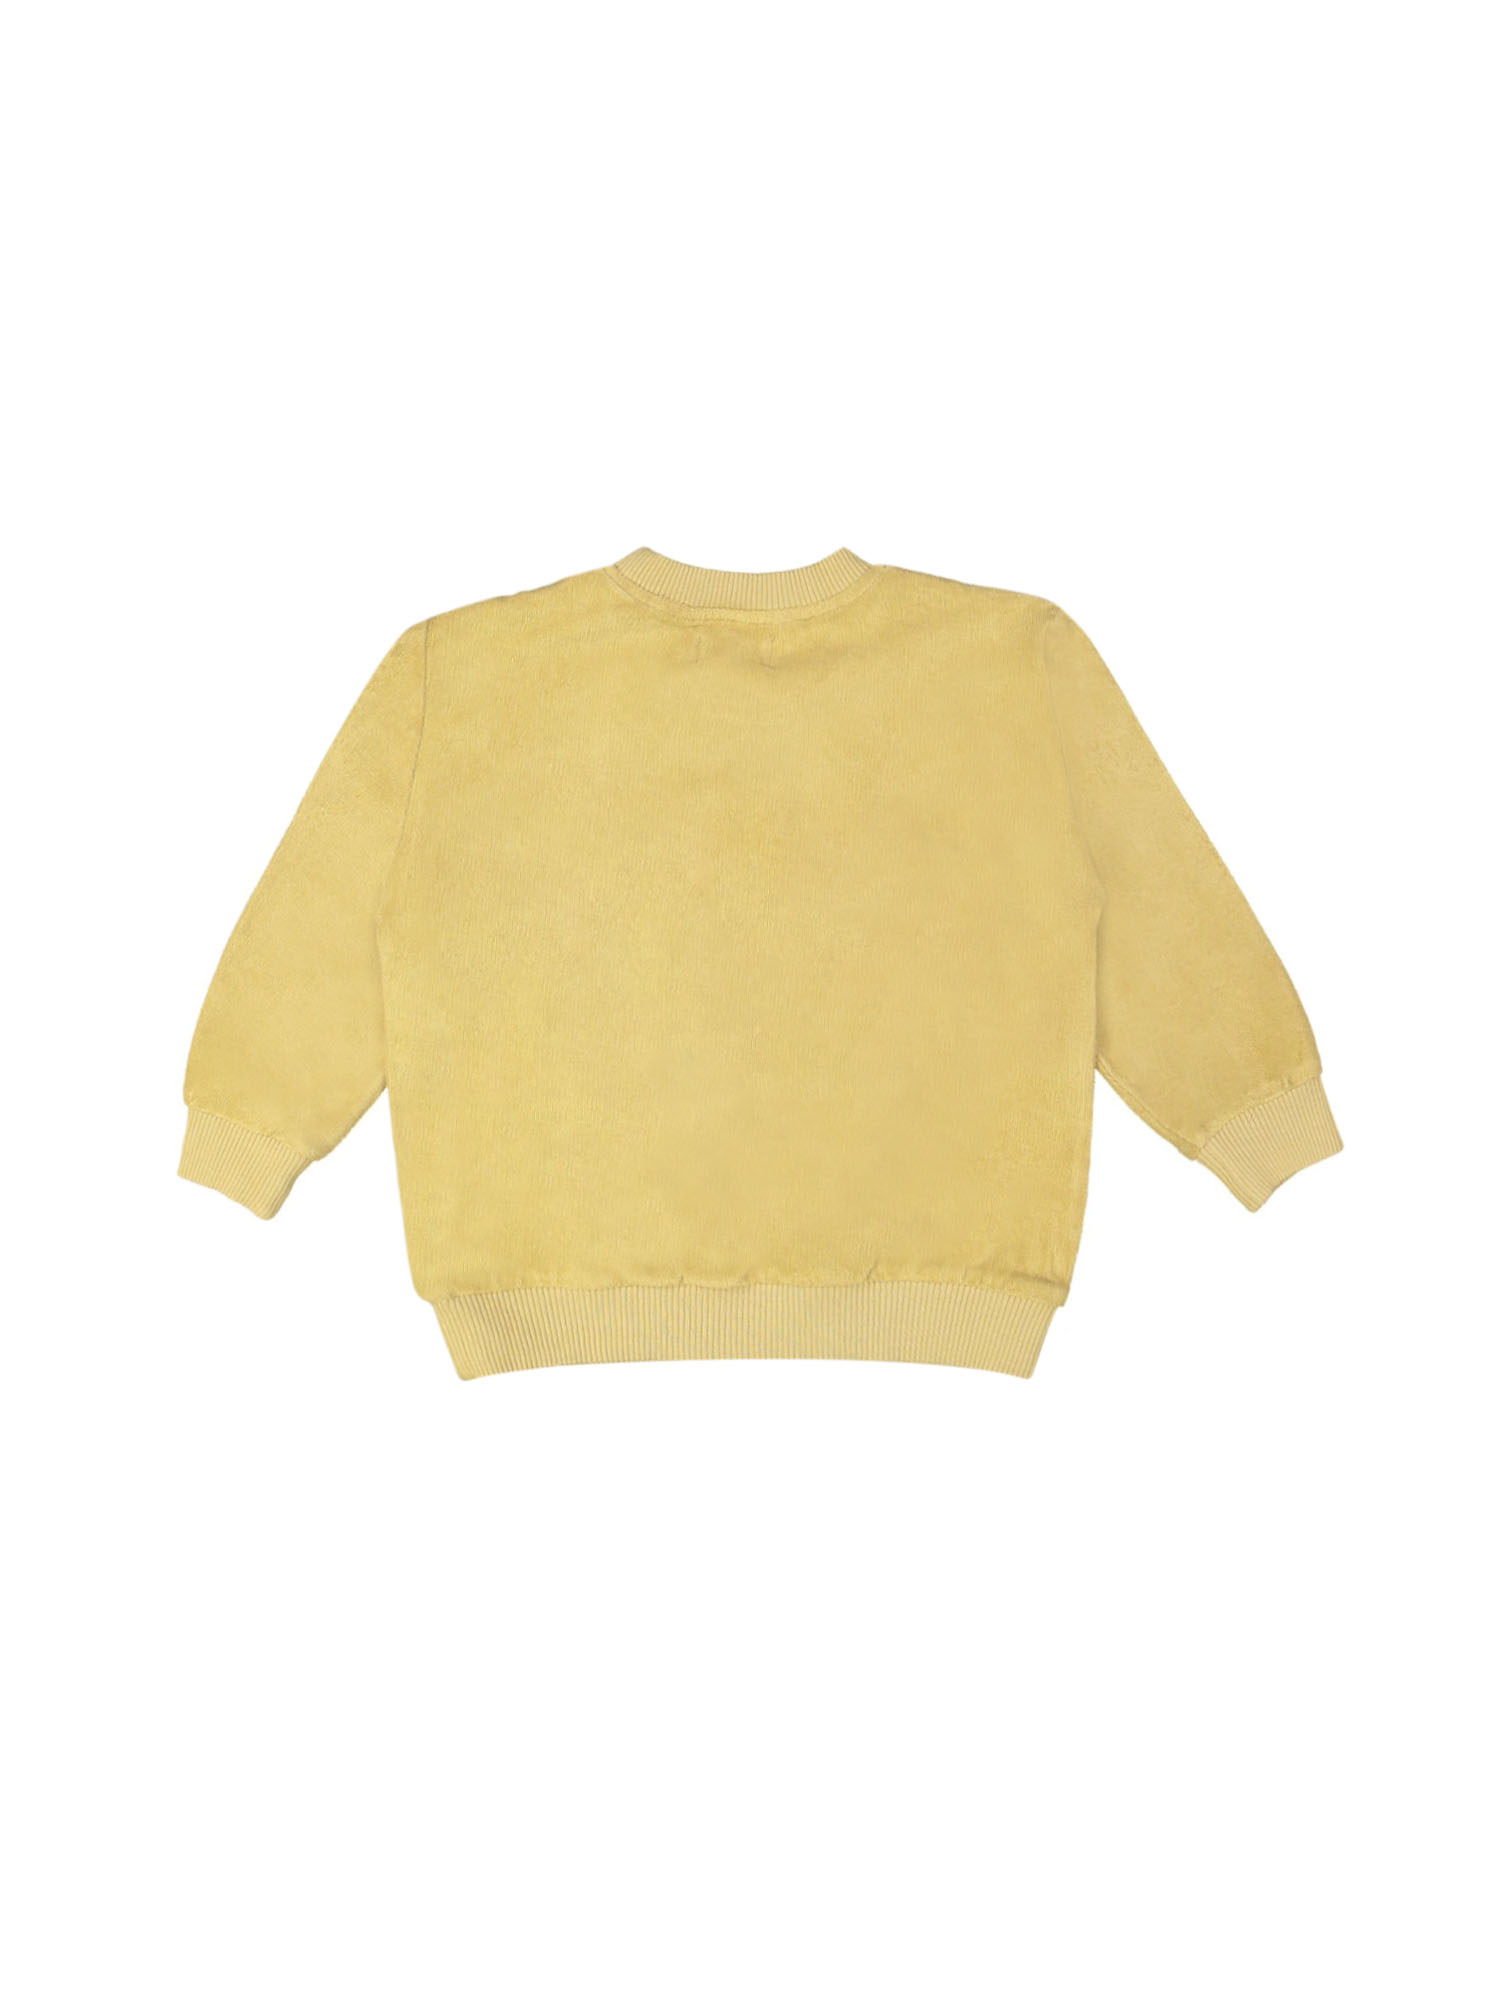 sweater monkey mustard